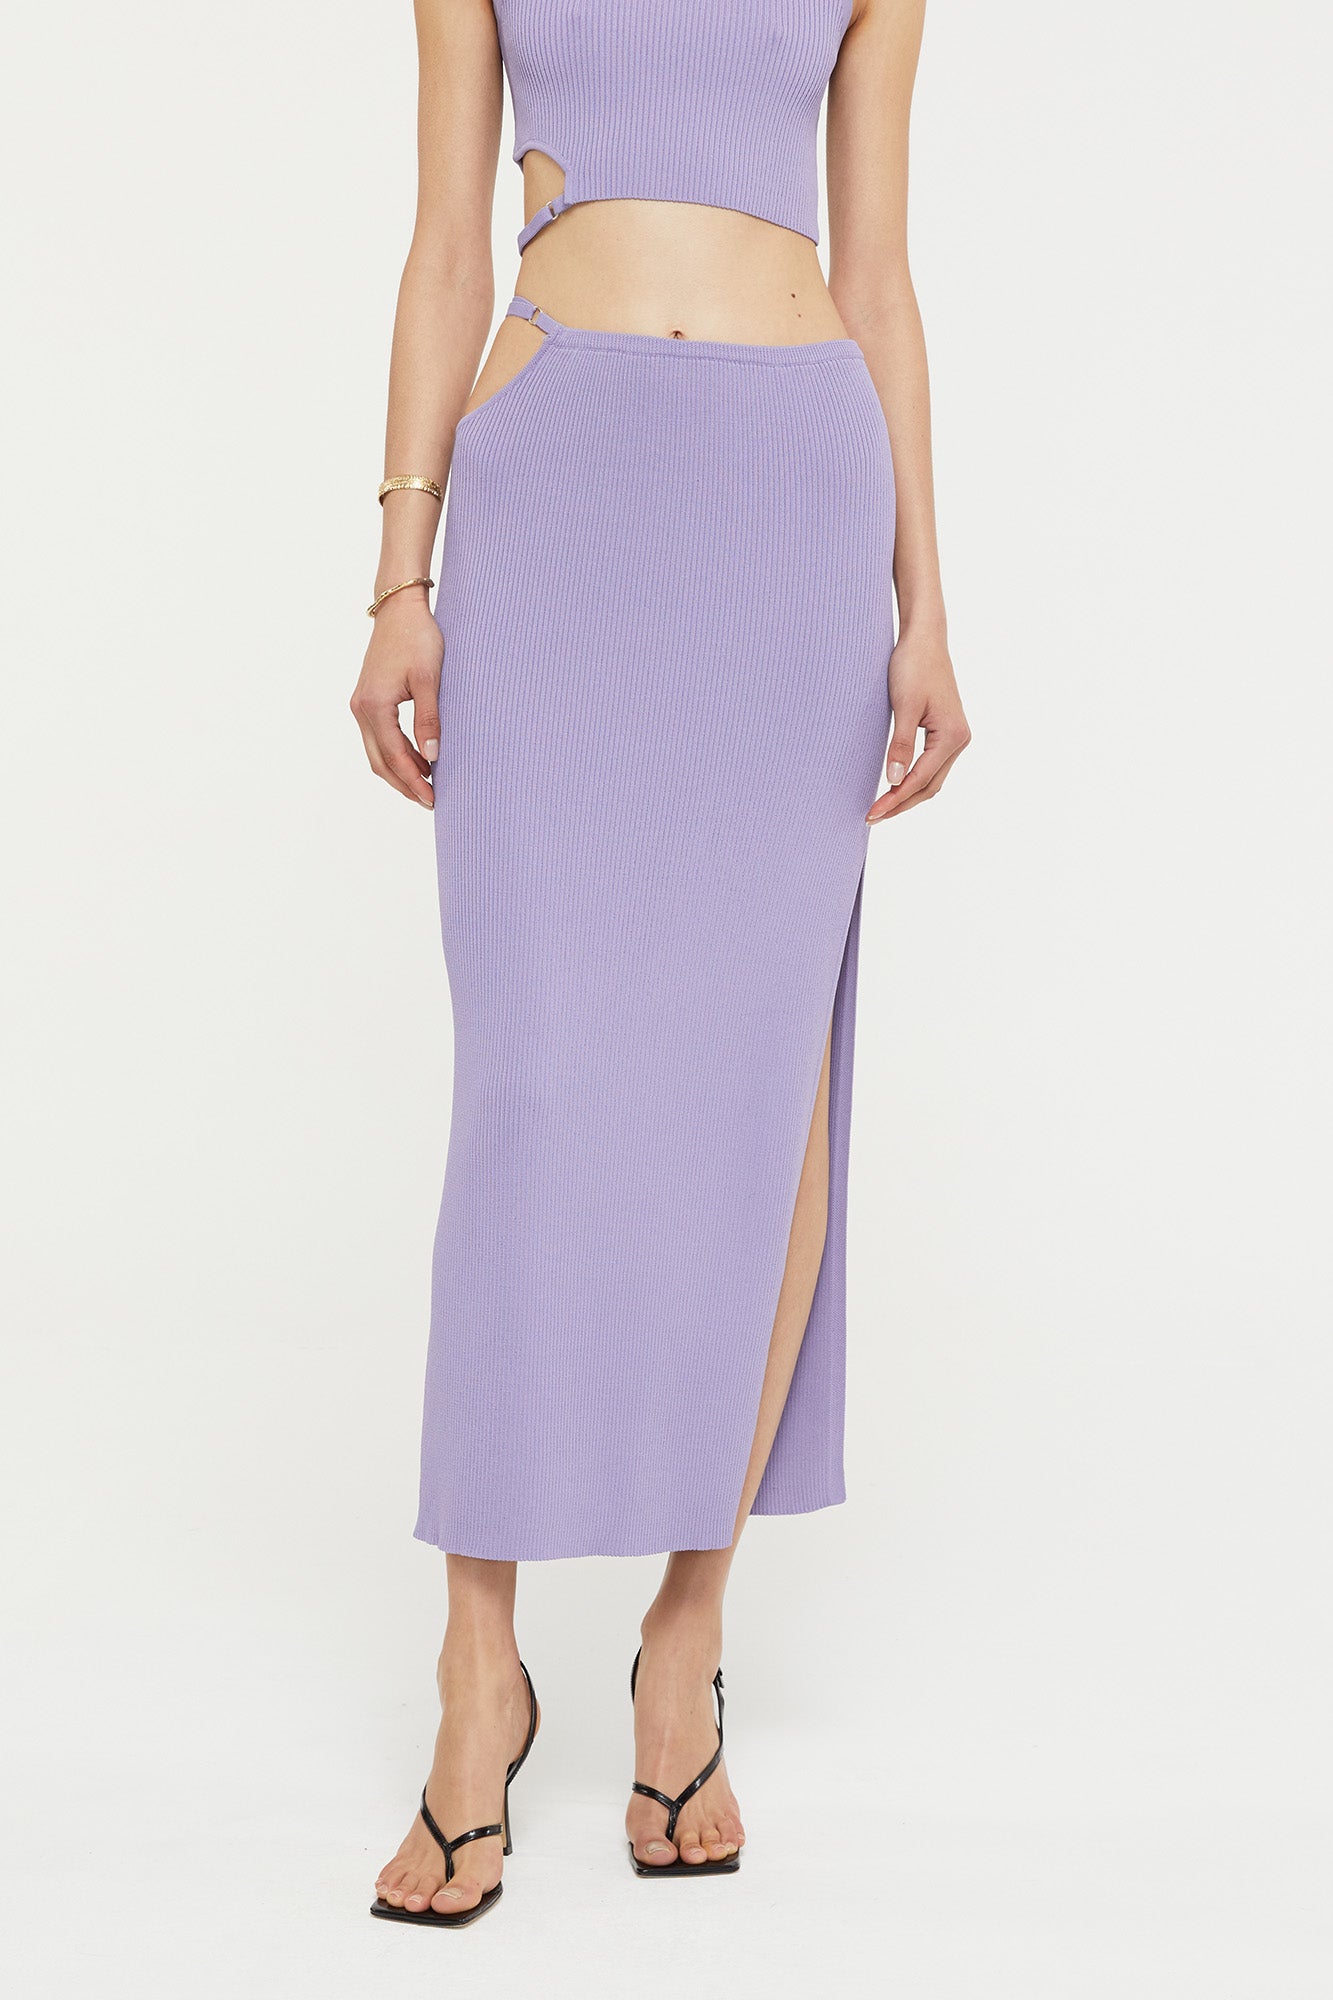 GINIA Selena Knit Skirt in Lavender